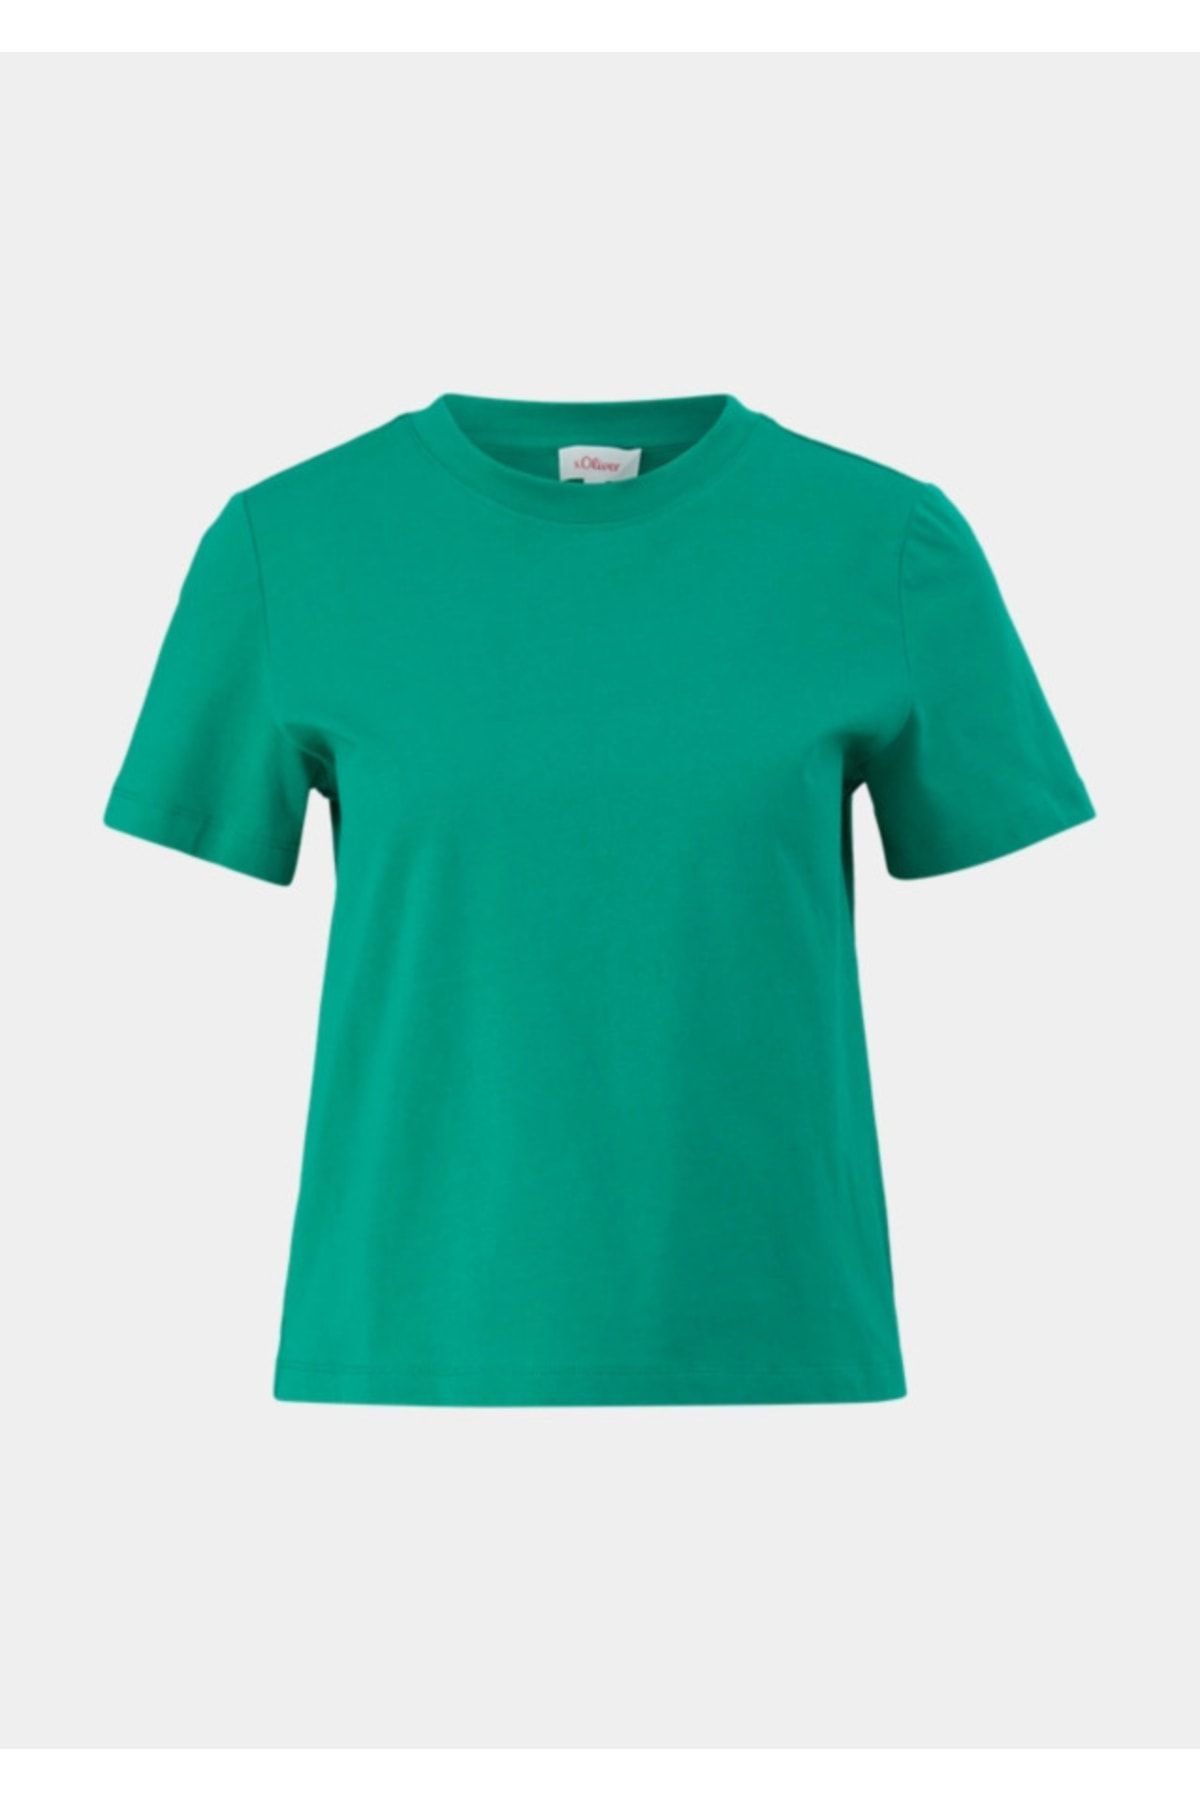 s.Oliver T-Shirt Trendyol - Damen/Mädchen